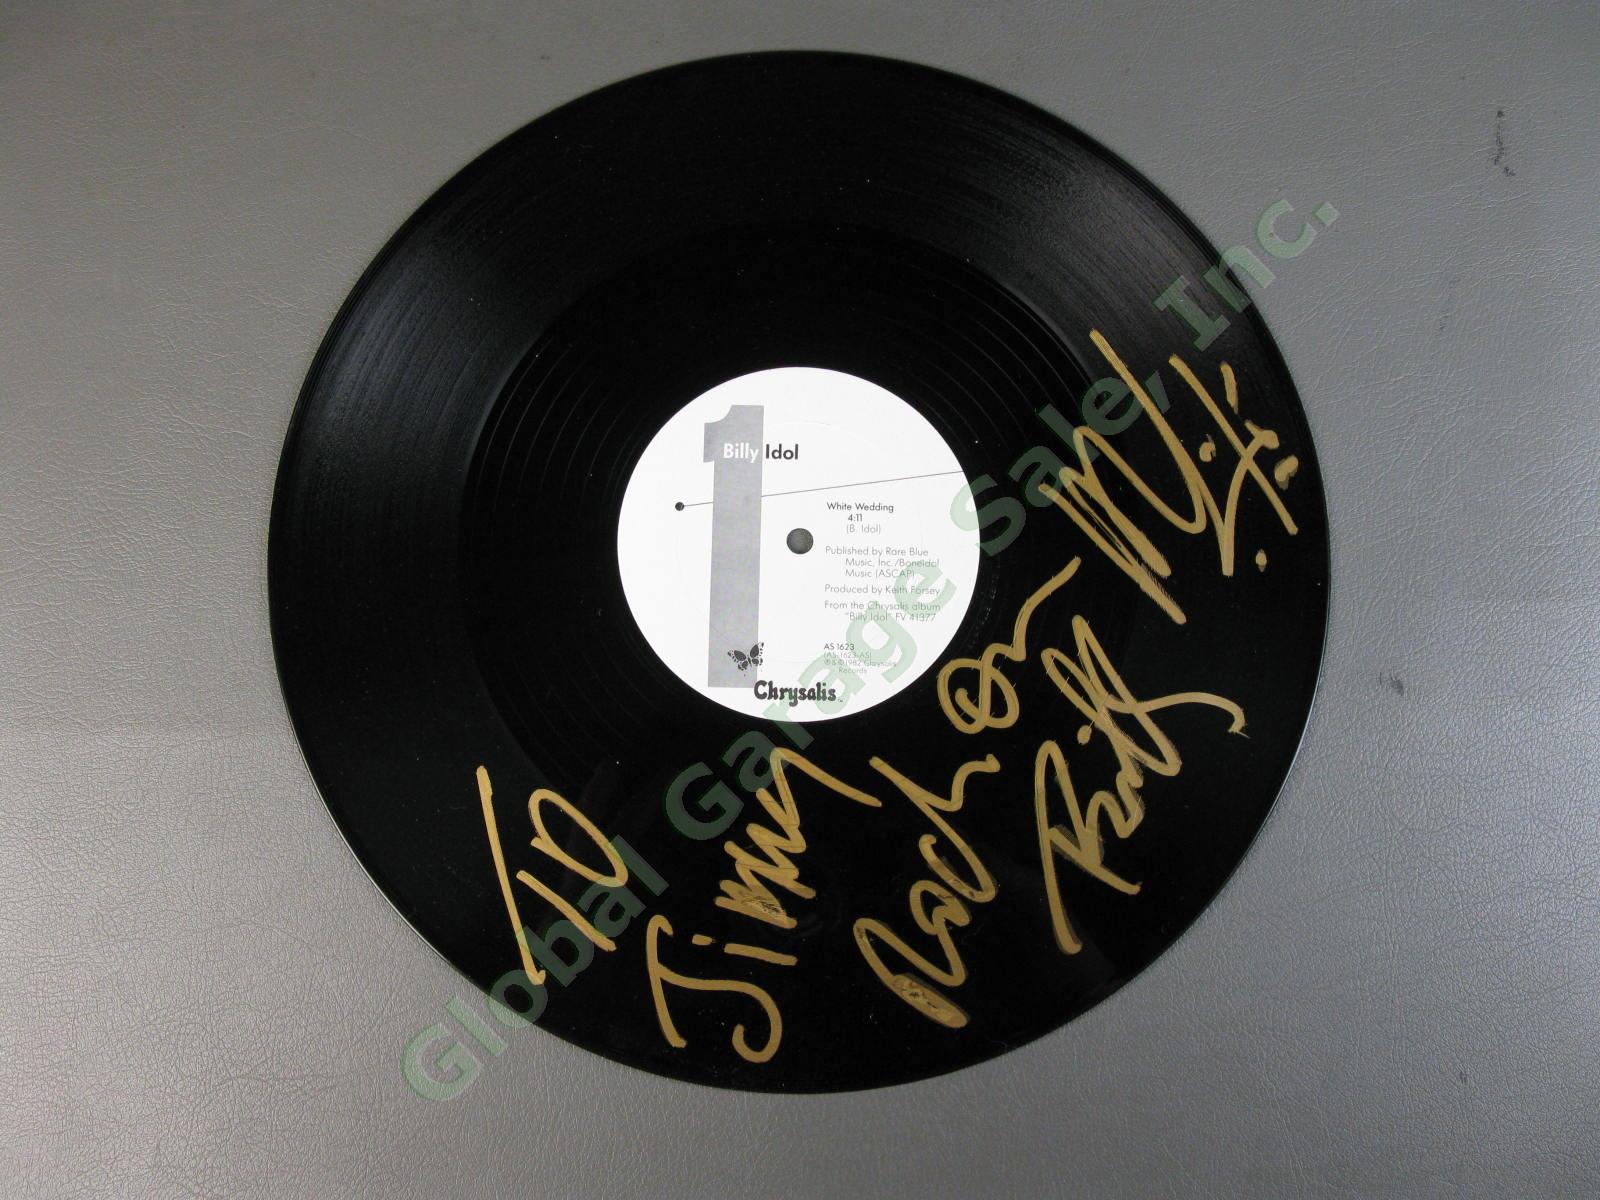 Billy Idol Signed 1982 White Wedding Single Promo 12 33 Record Chrysalis AS-1623